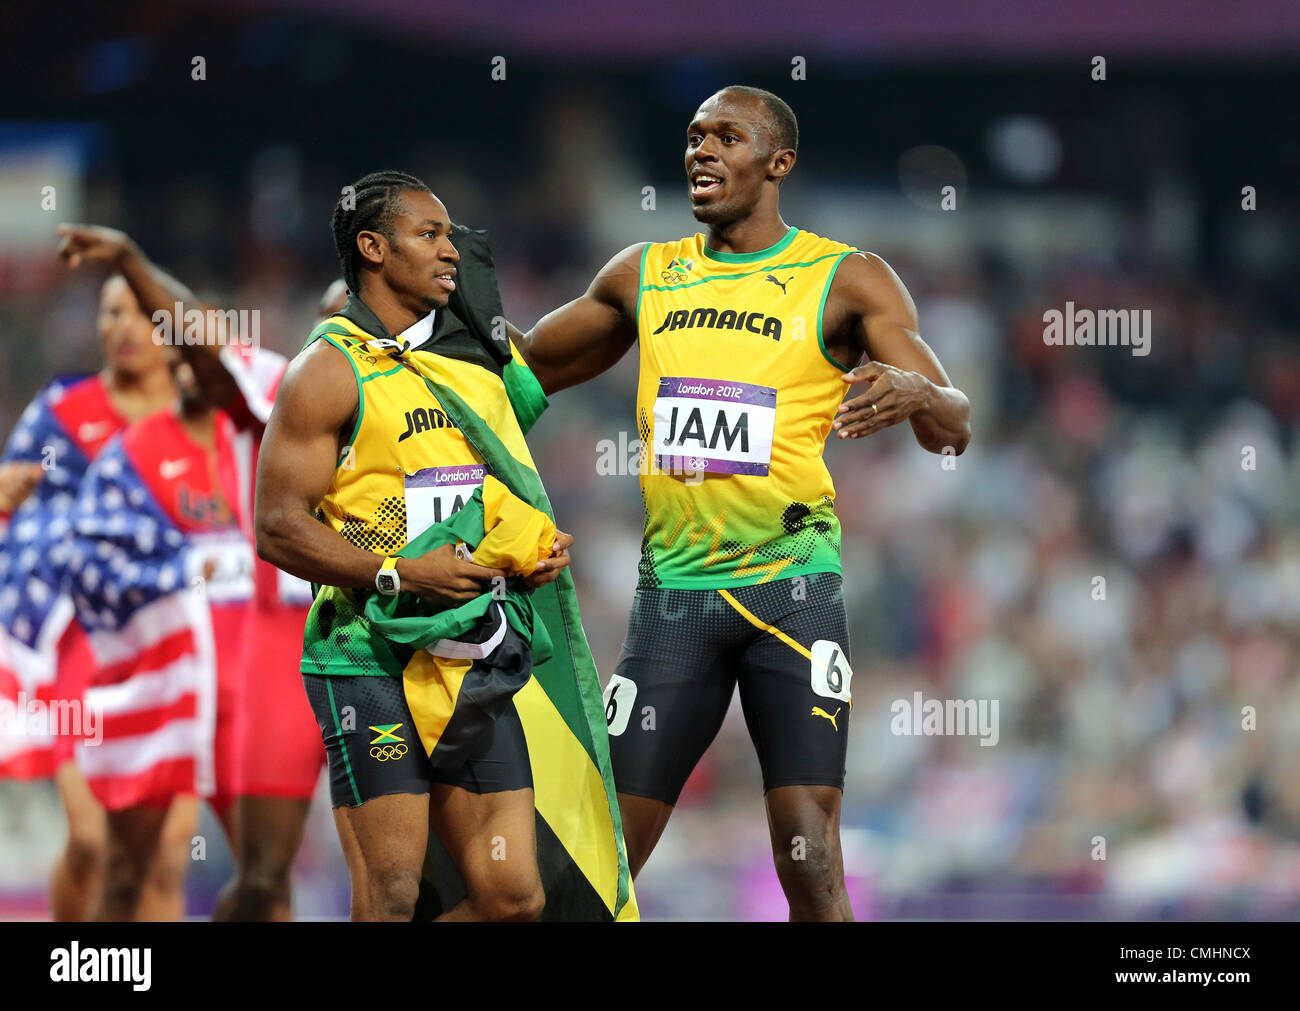 YOHAN BLAKE & USAIN BOLT Jamaika LONDON 2012 Olympische Spiele, MENS 4X100M FINALL STRATFORD, LONDON, ENGLAND 11. August 2012 DIC9321 Stockfoto